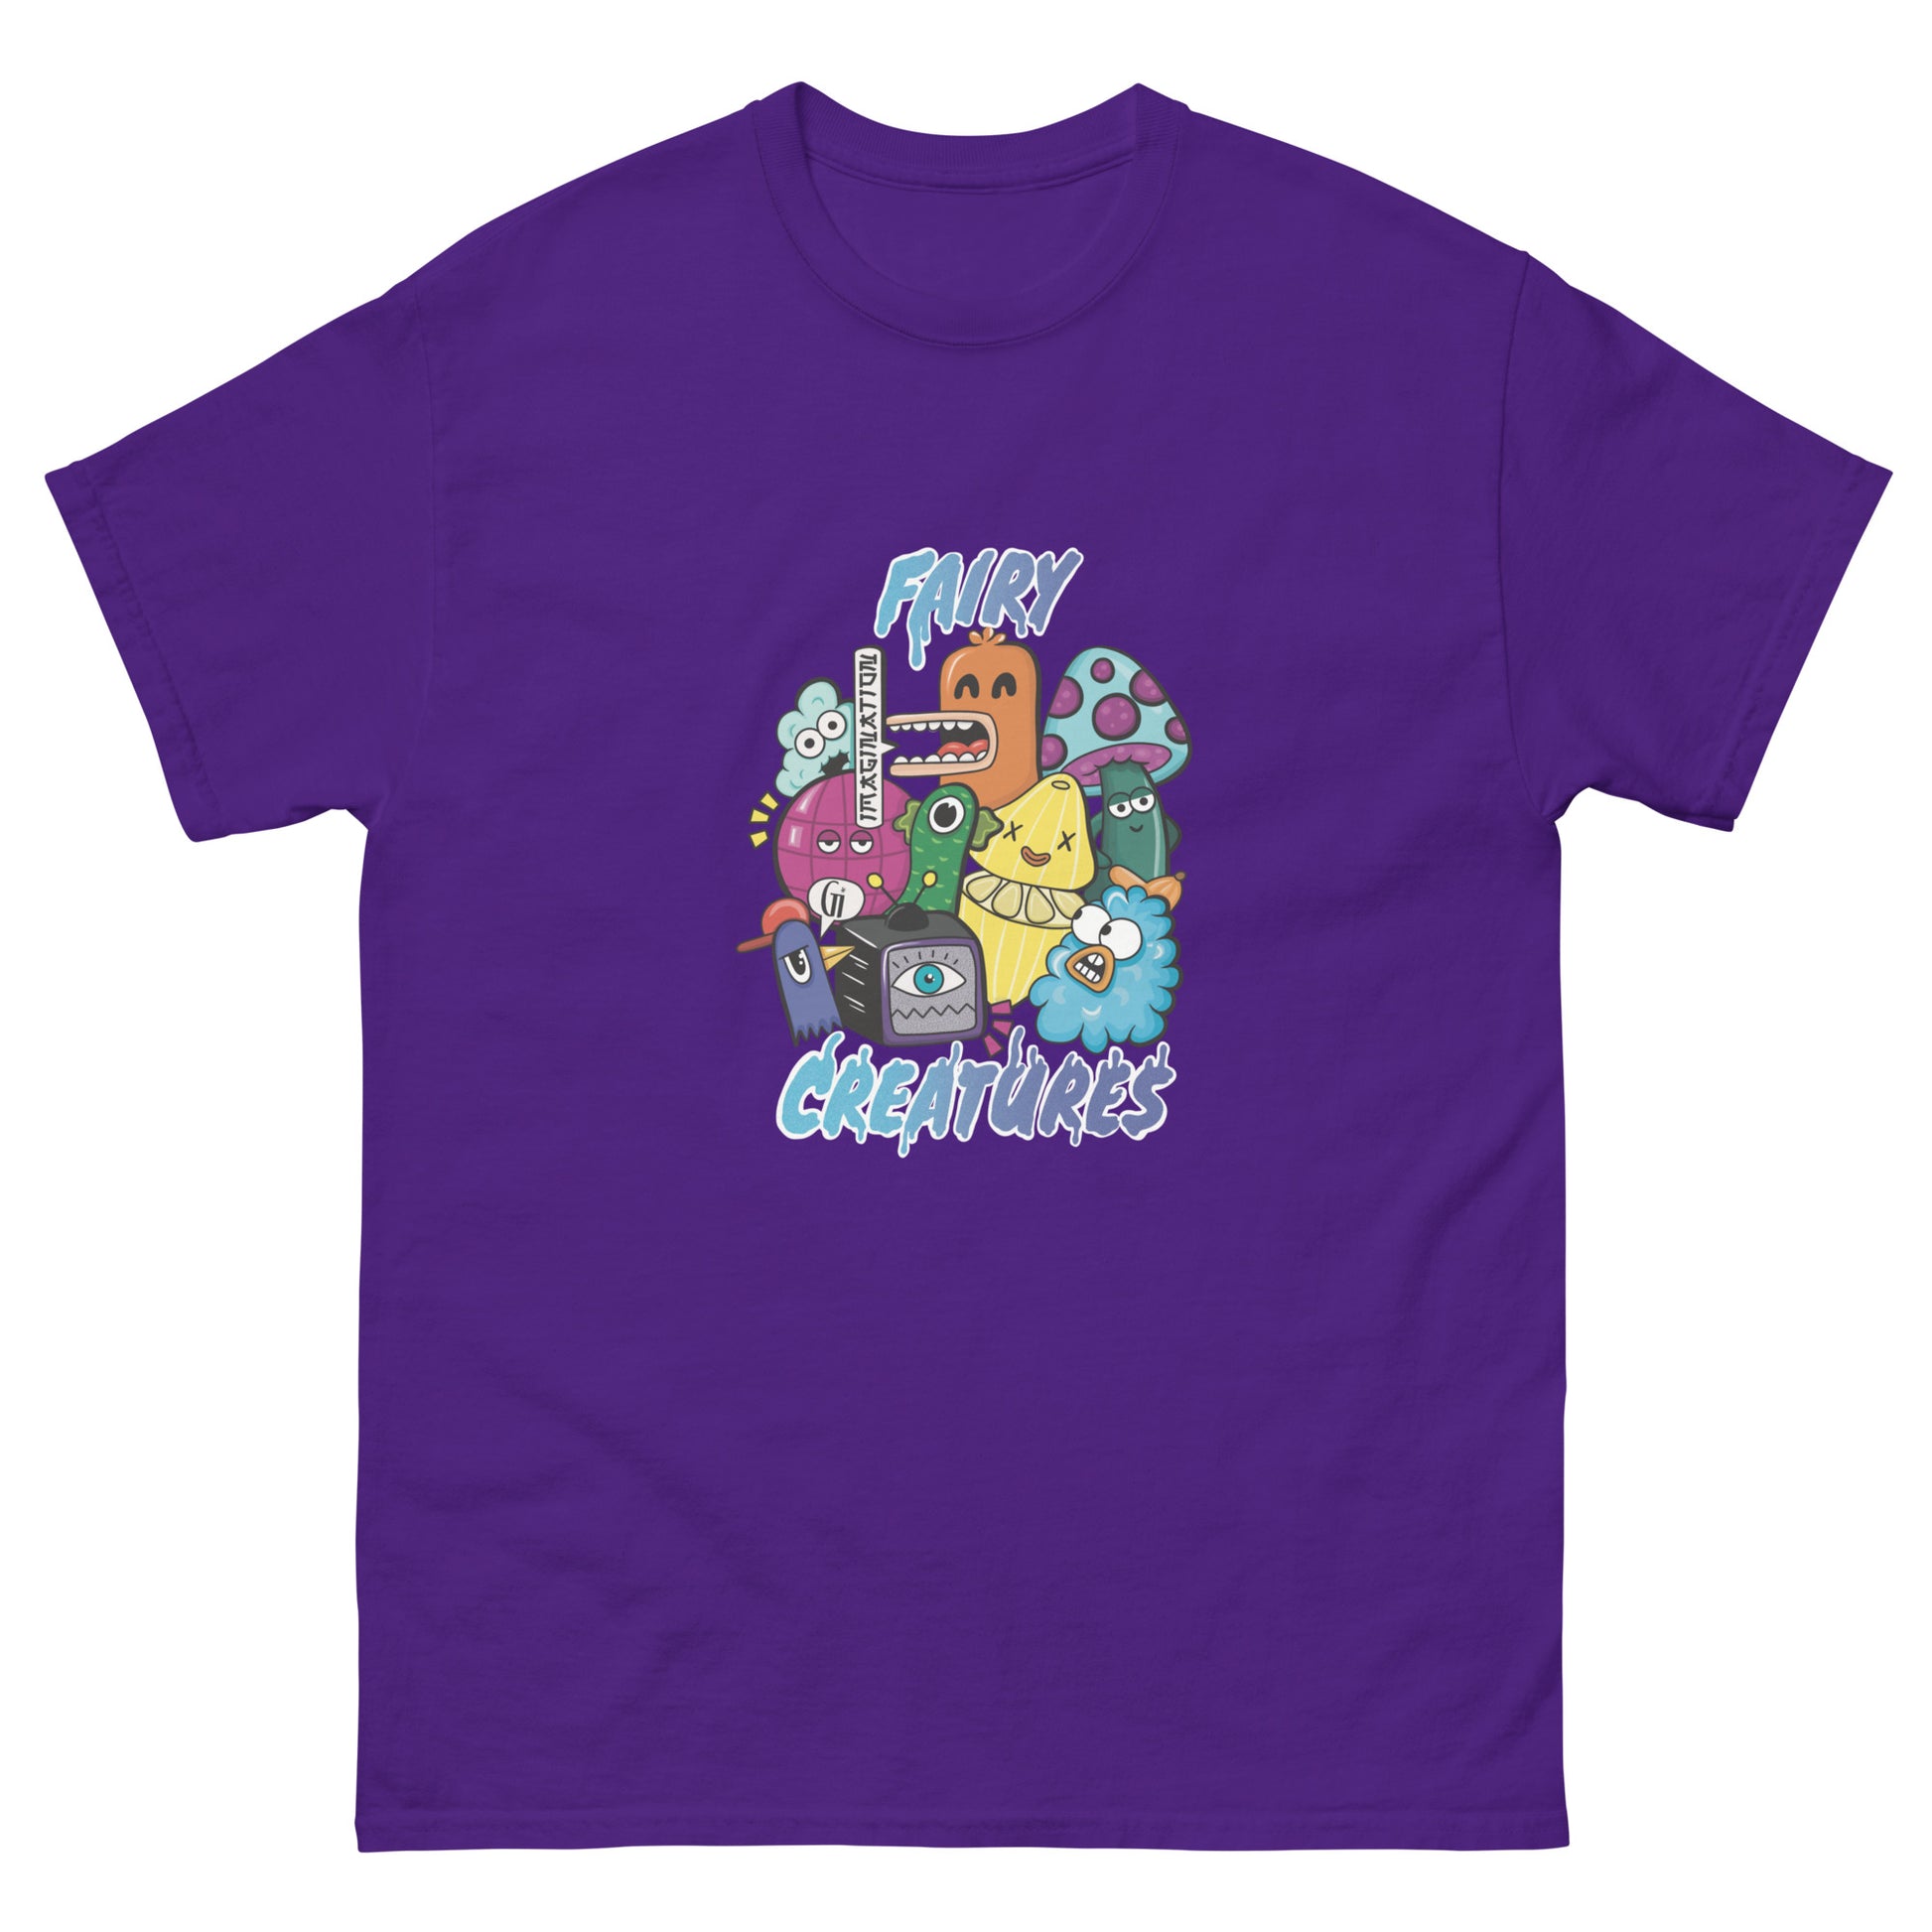 purple color cotton t shirt with fairy creatures